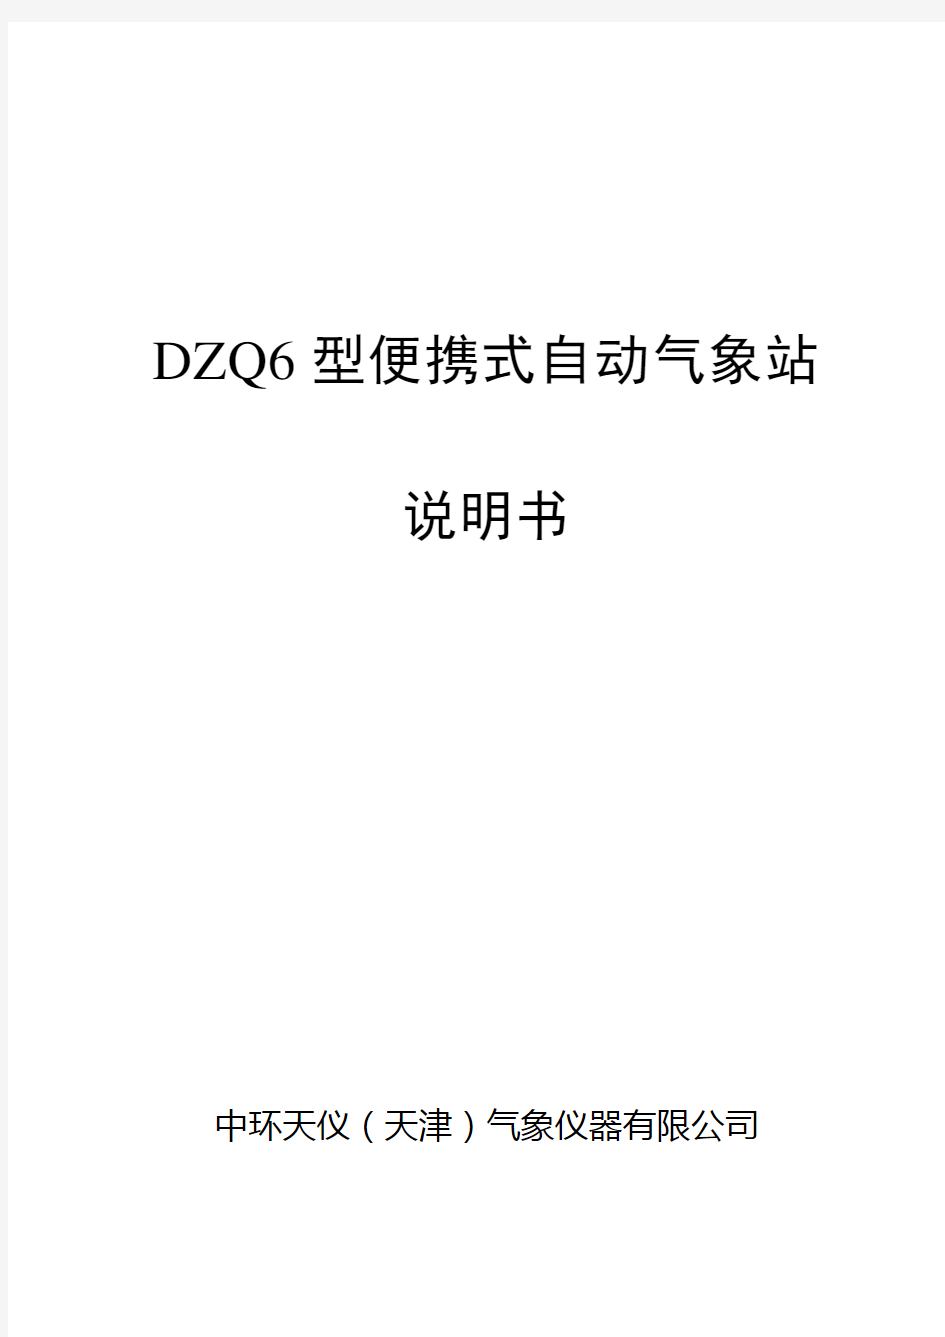 DZQ型便携式自动气象站说明书